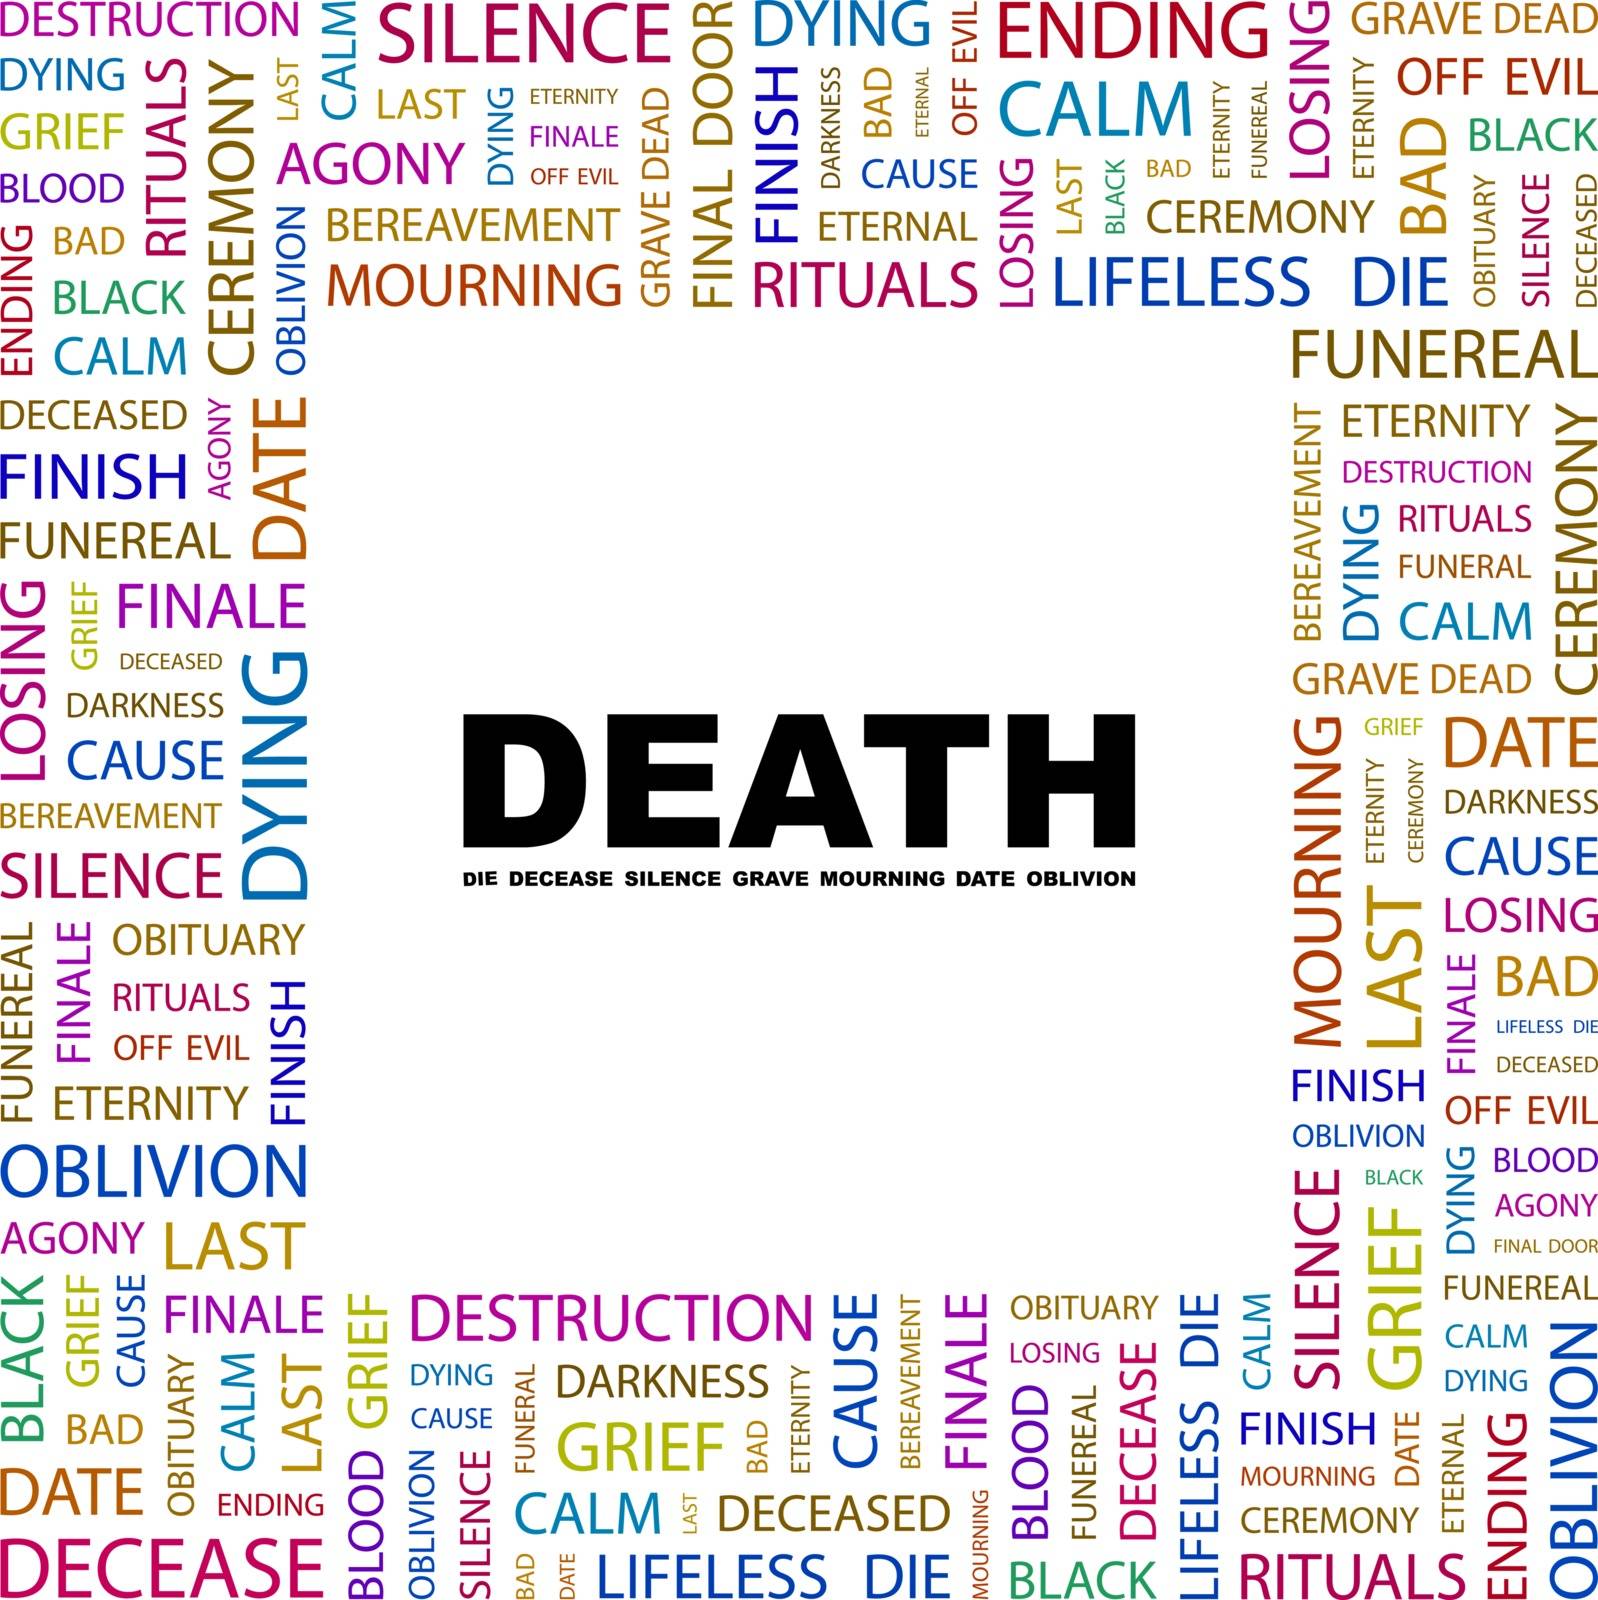 DEATH. by login